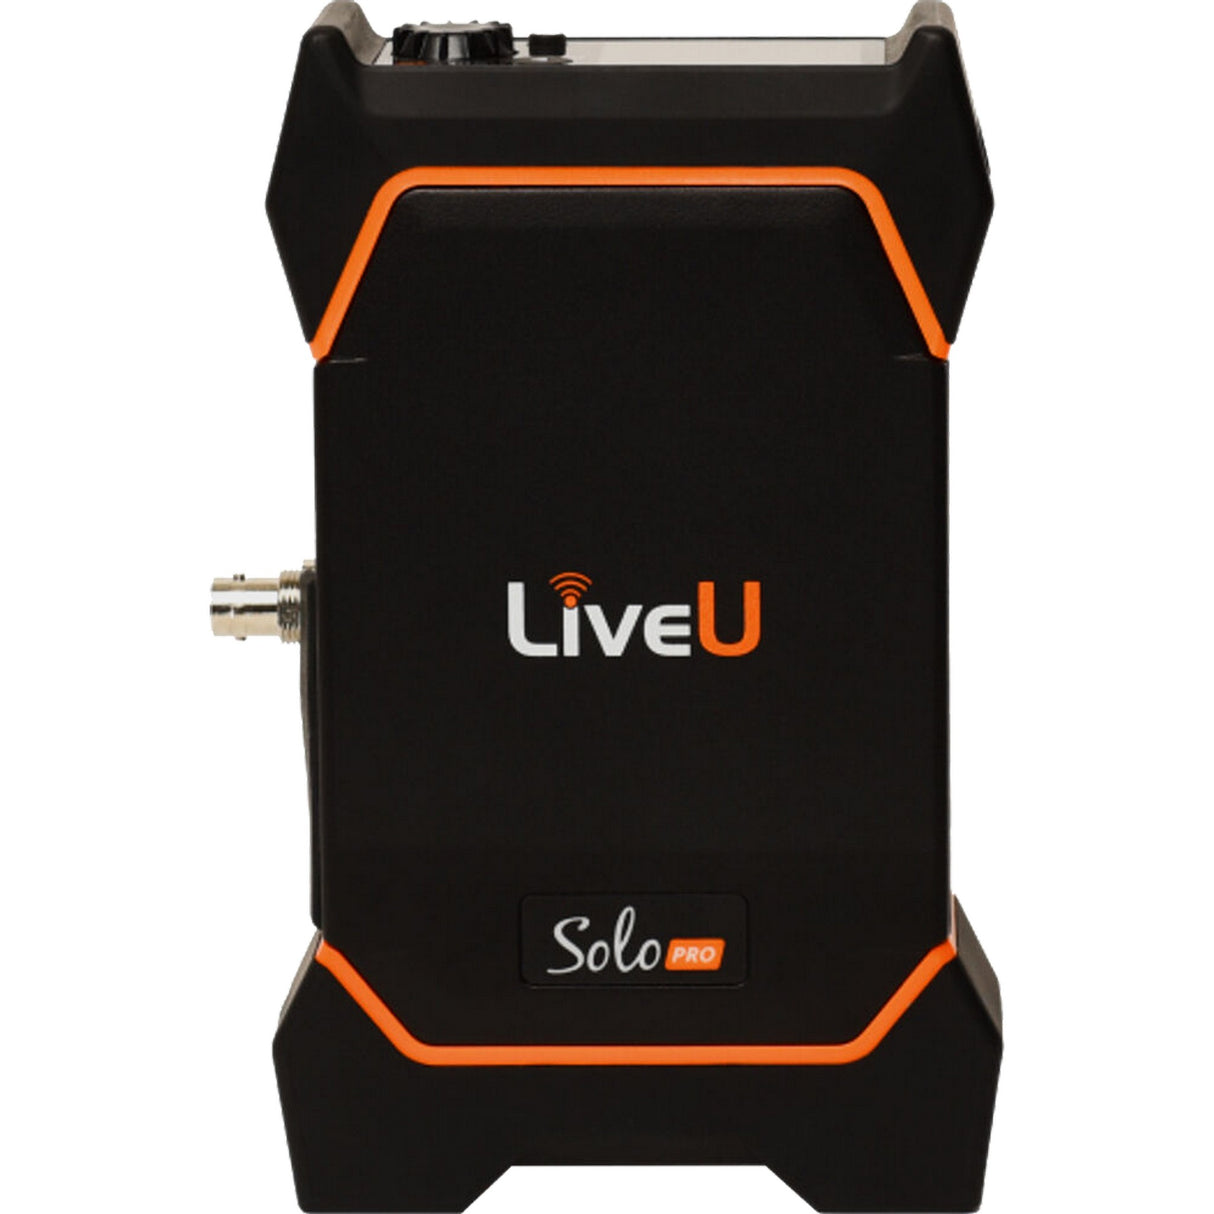 LiveU Solo PRO HDMI/SDI Plug-and-Play Encoder